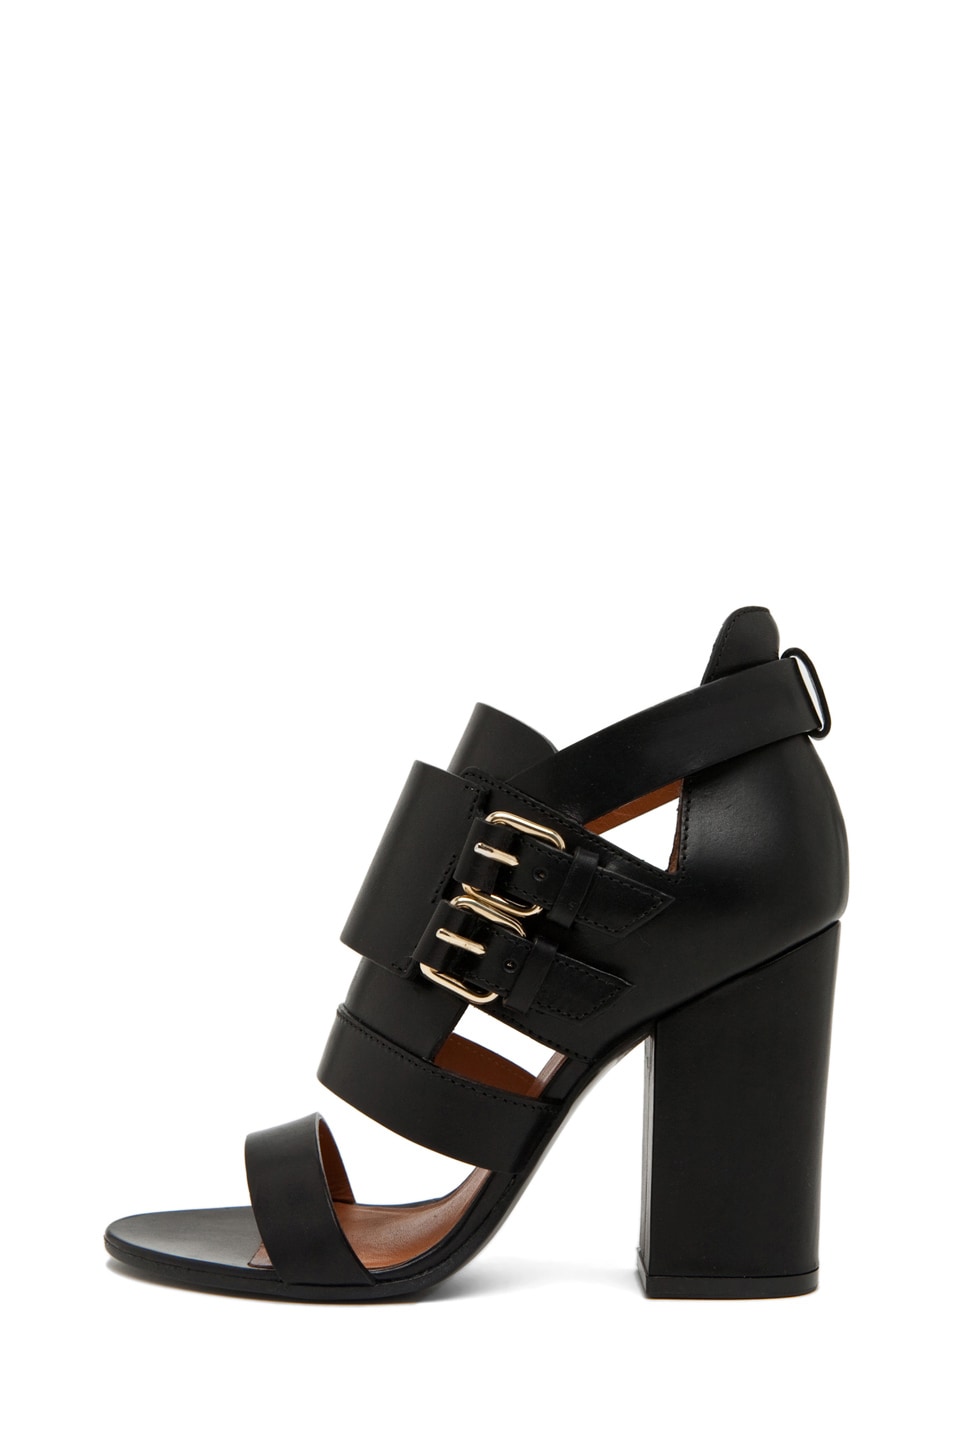 Givenchy Vittorias Heel in Black | FWRD